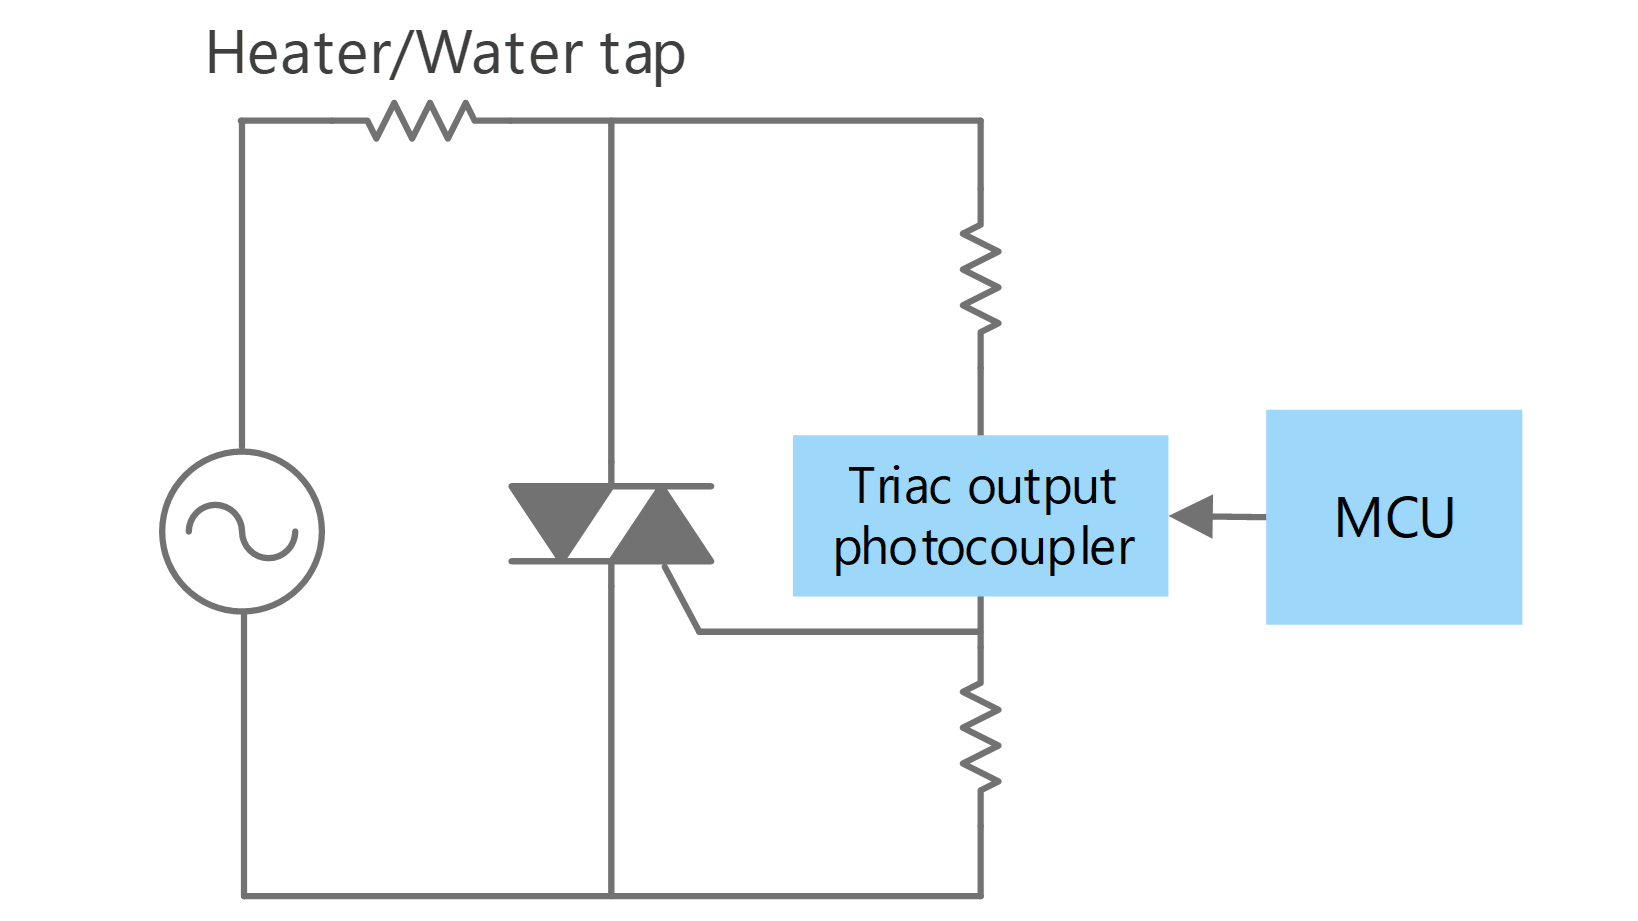 Heater/Water tap control circuit